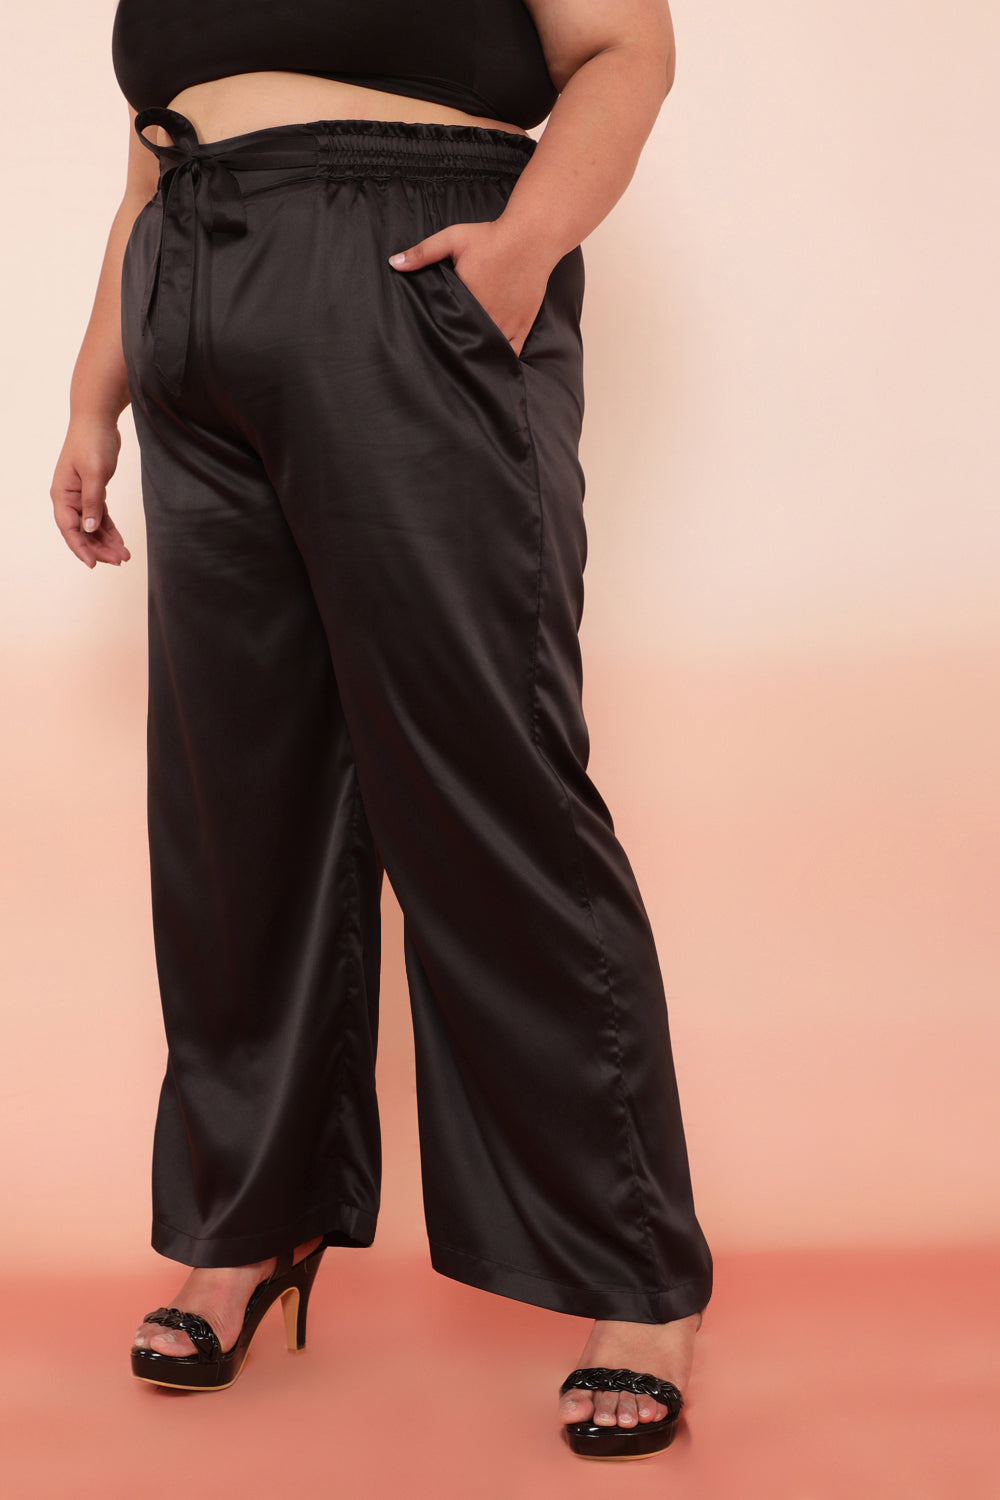 Black Solid Satin High Waist Pants for Women